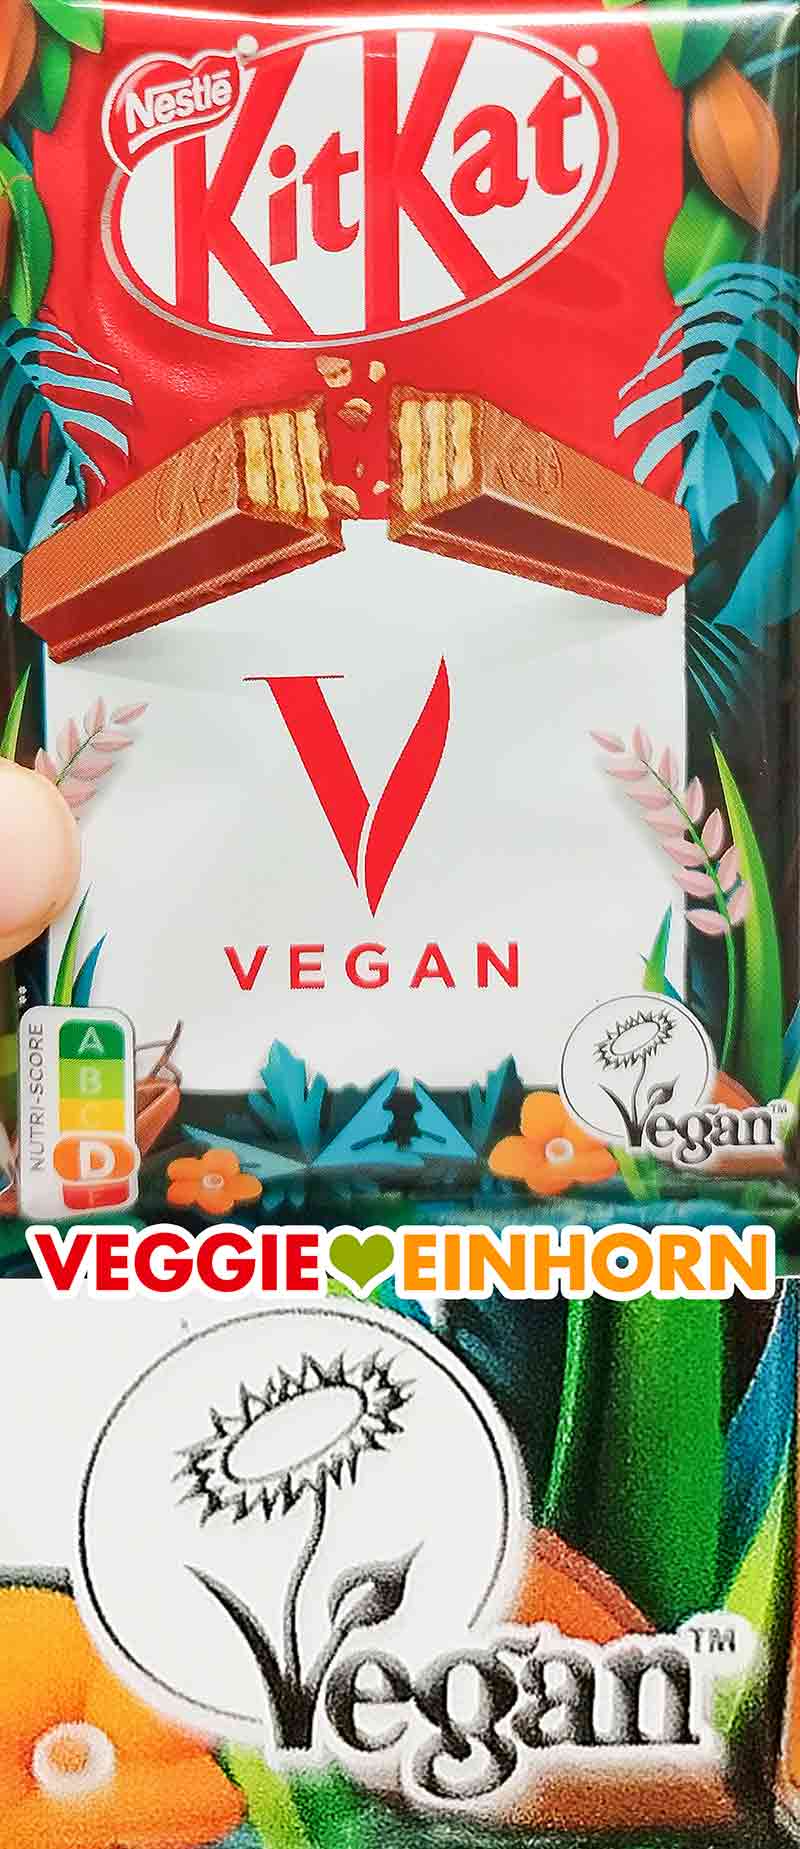 Veganblume auf dem veganen KitKat